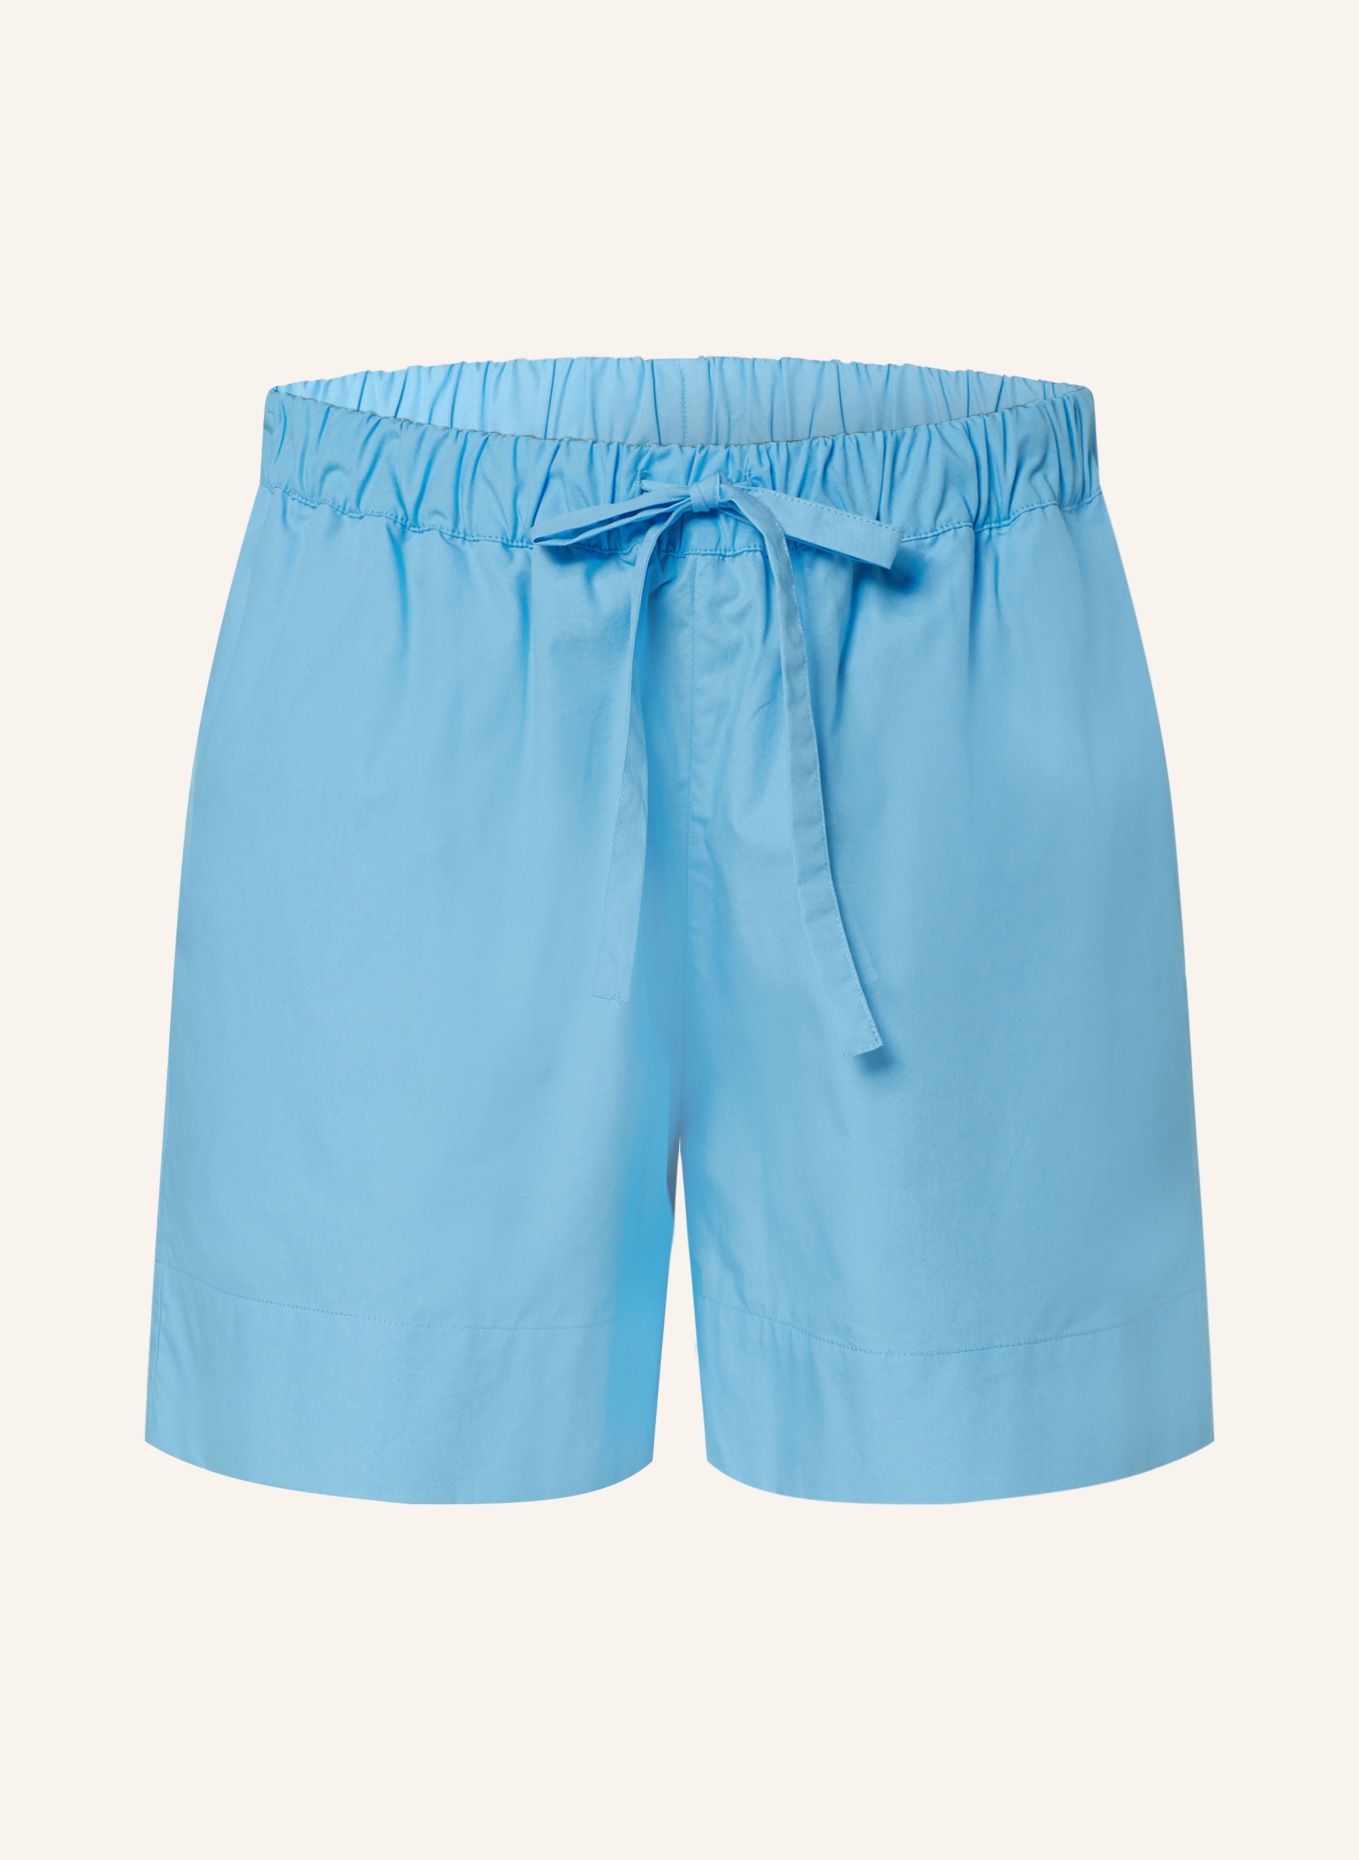 MRS & HUGS Shorts, Farbe: BLAU (Bild 1)